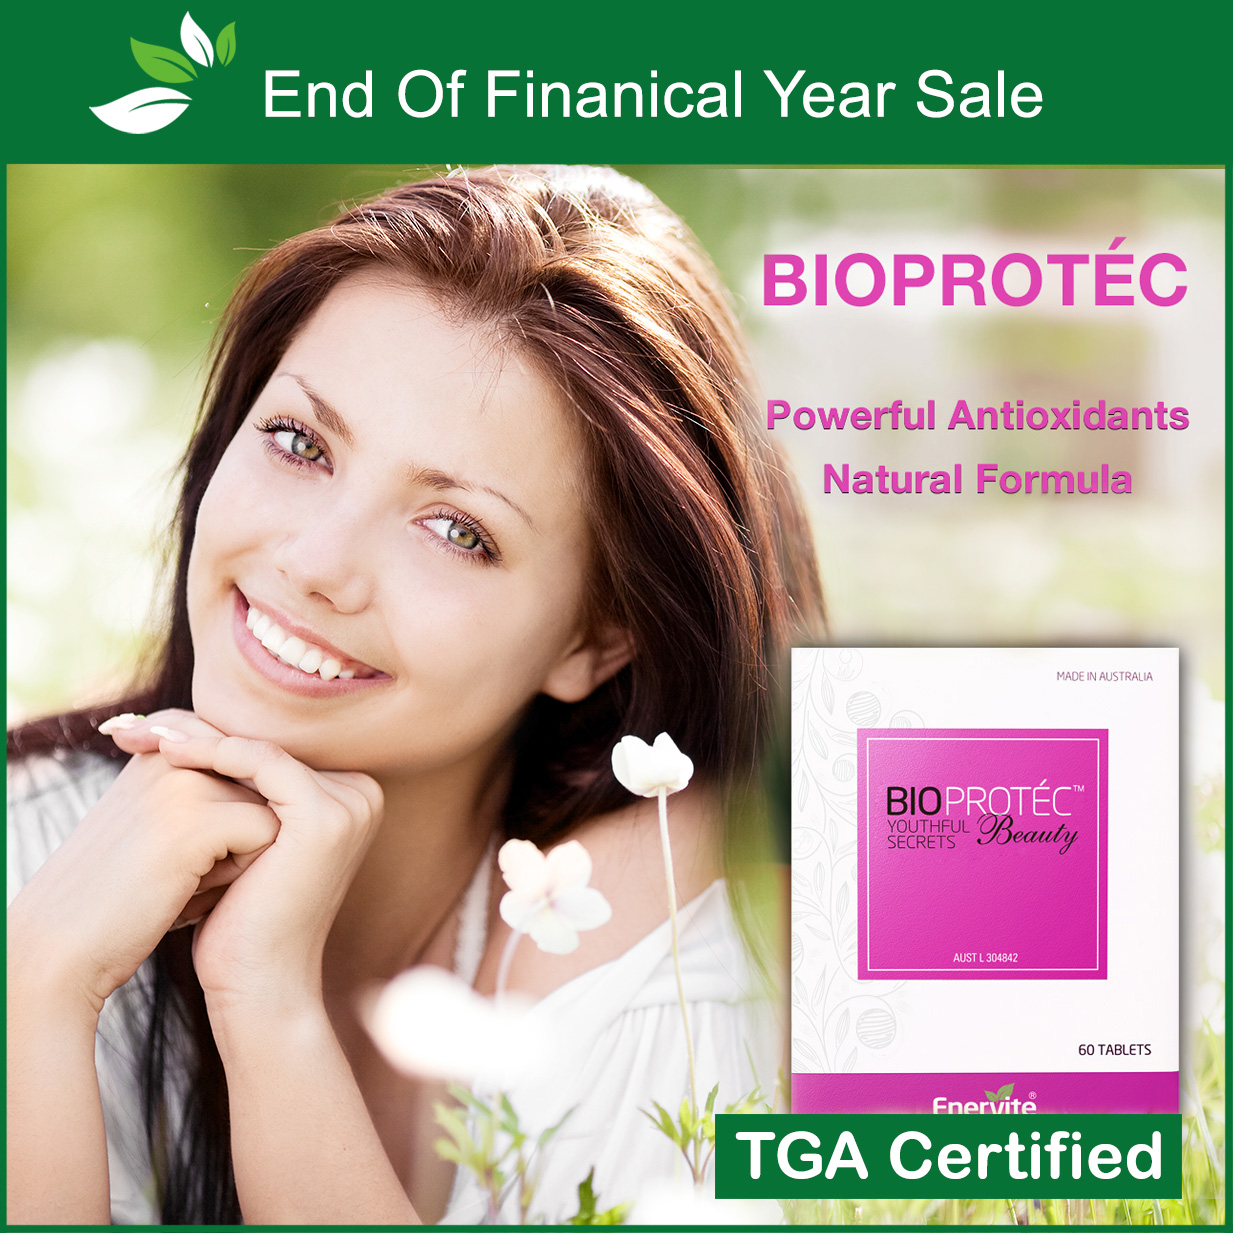 Bioprotec antioxidant anti-ageing EOFY Sale